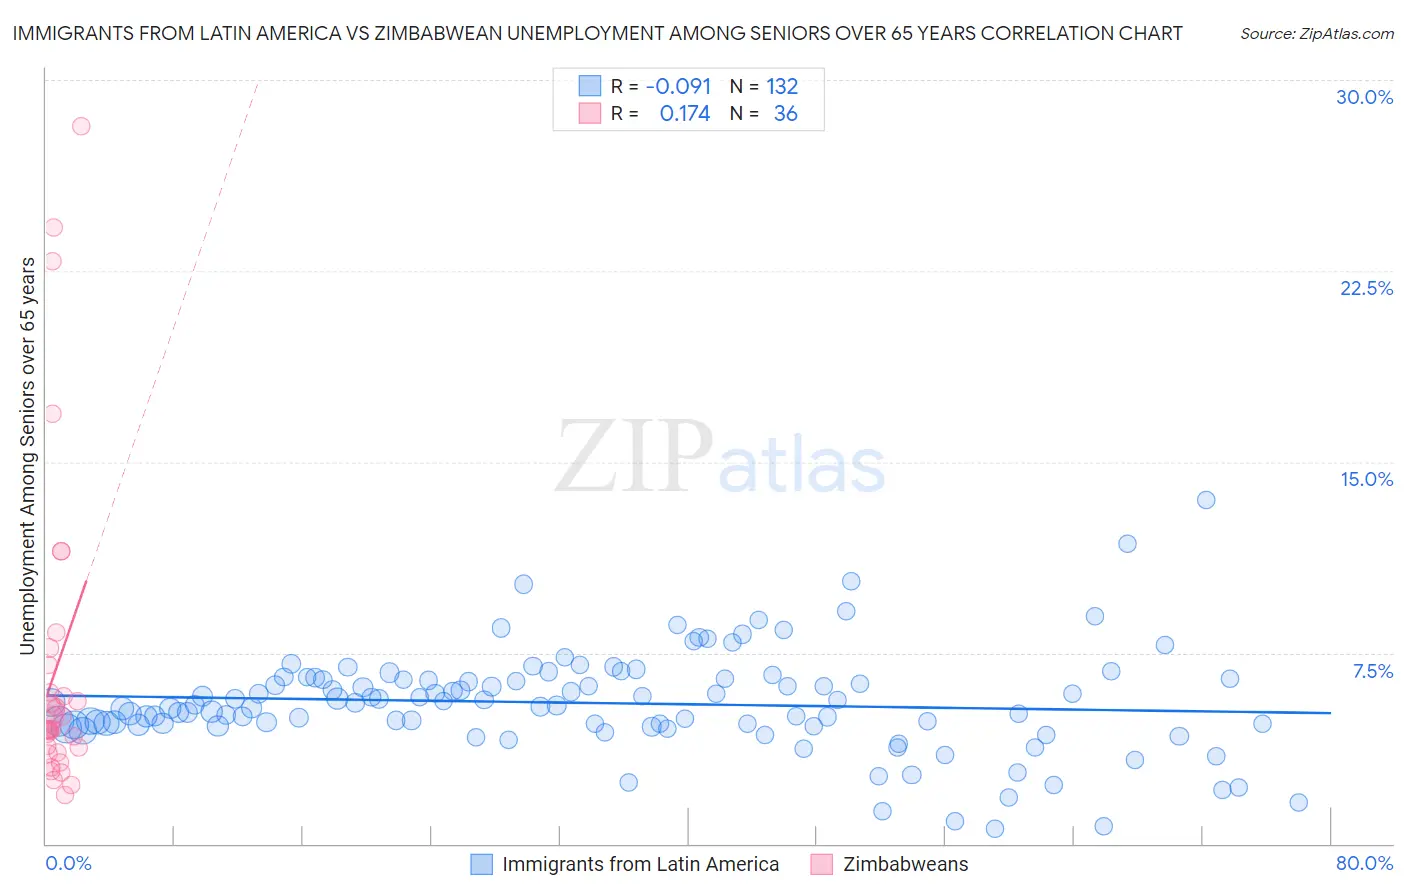 Immigrants from Latin America vs Zimbabwean Unemployment Among Seniors over 65 years